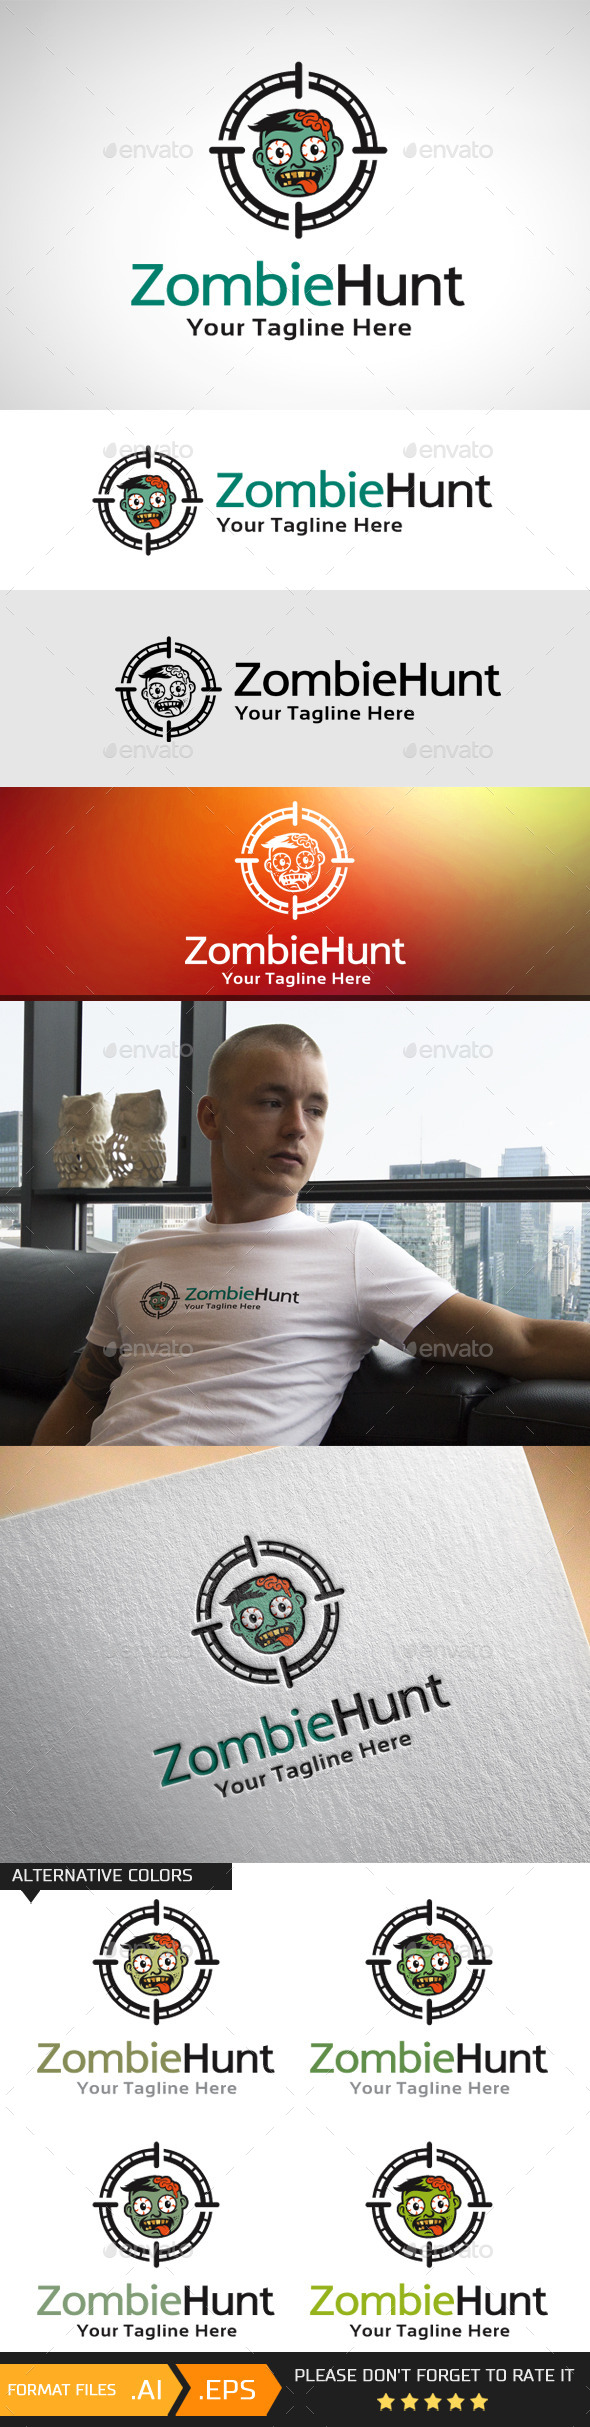 Zombie Hunt Logo Template